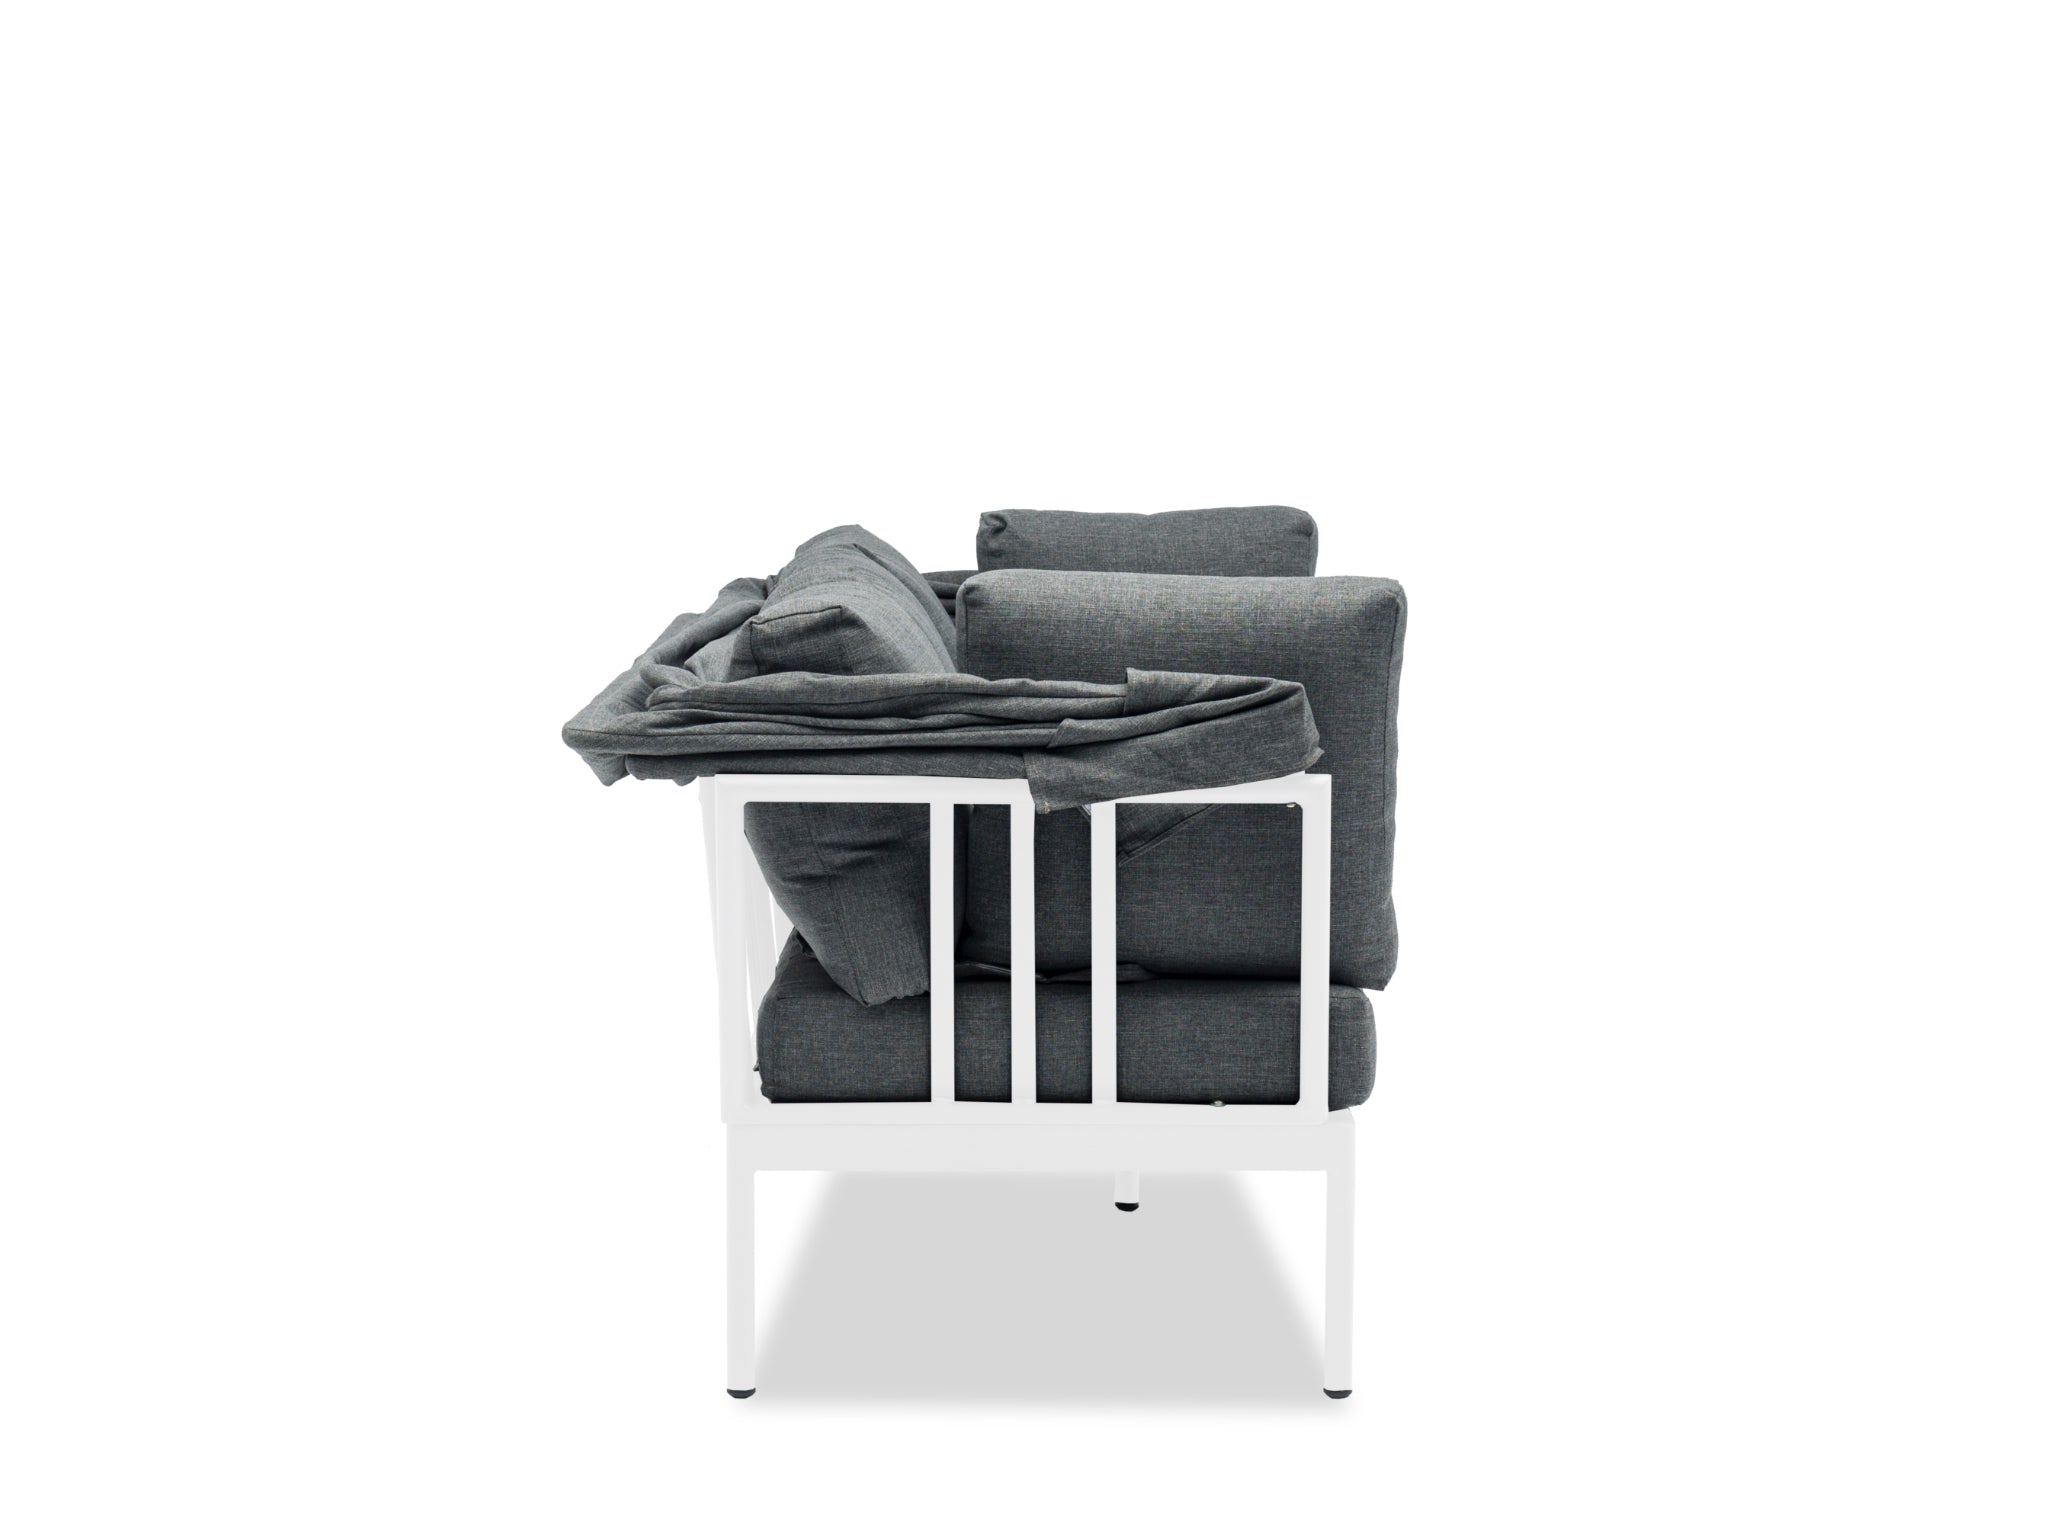 FurnitureOkay Florence Aluminium Outdoor Multi-Function Daybed — White